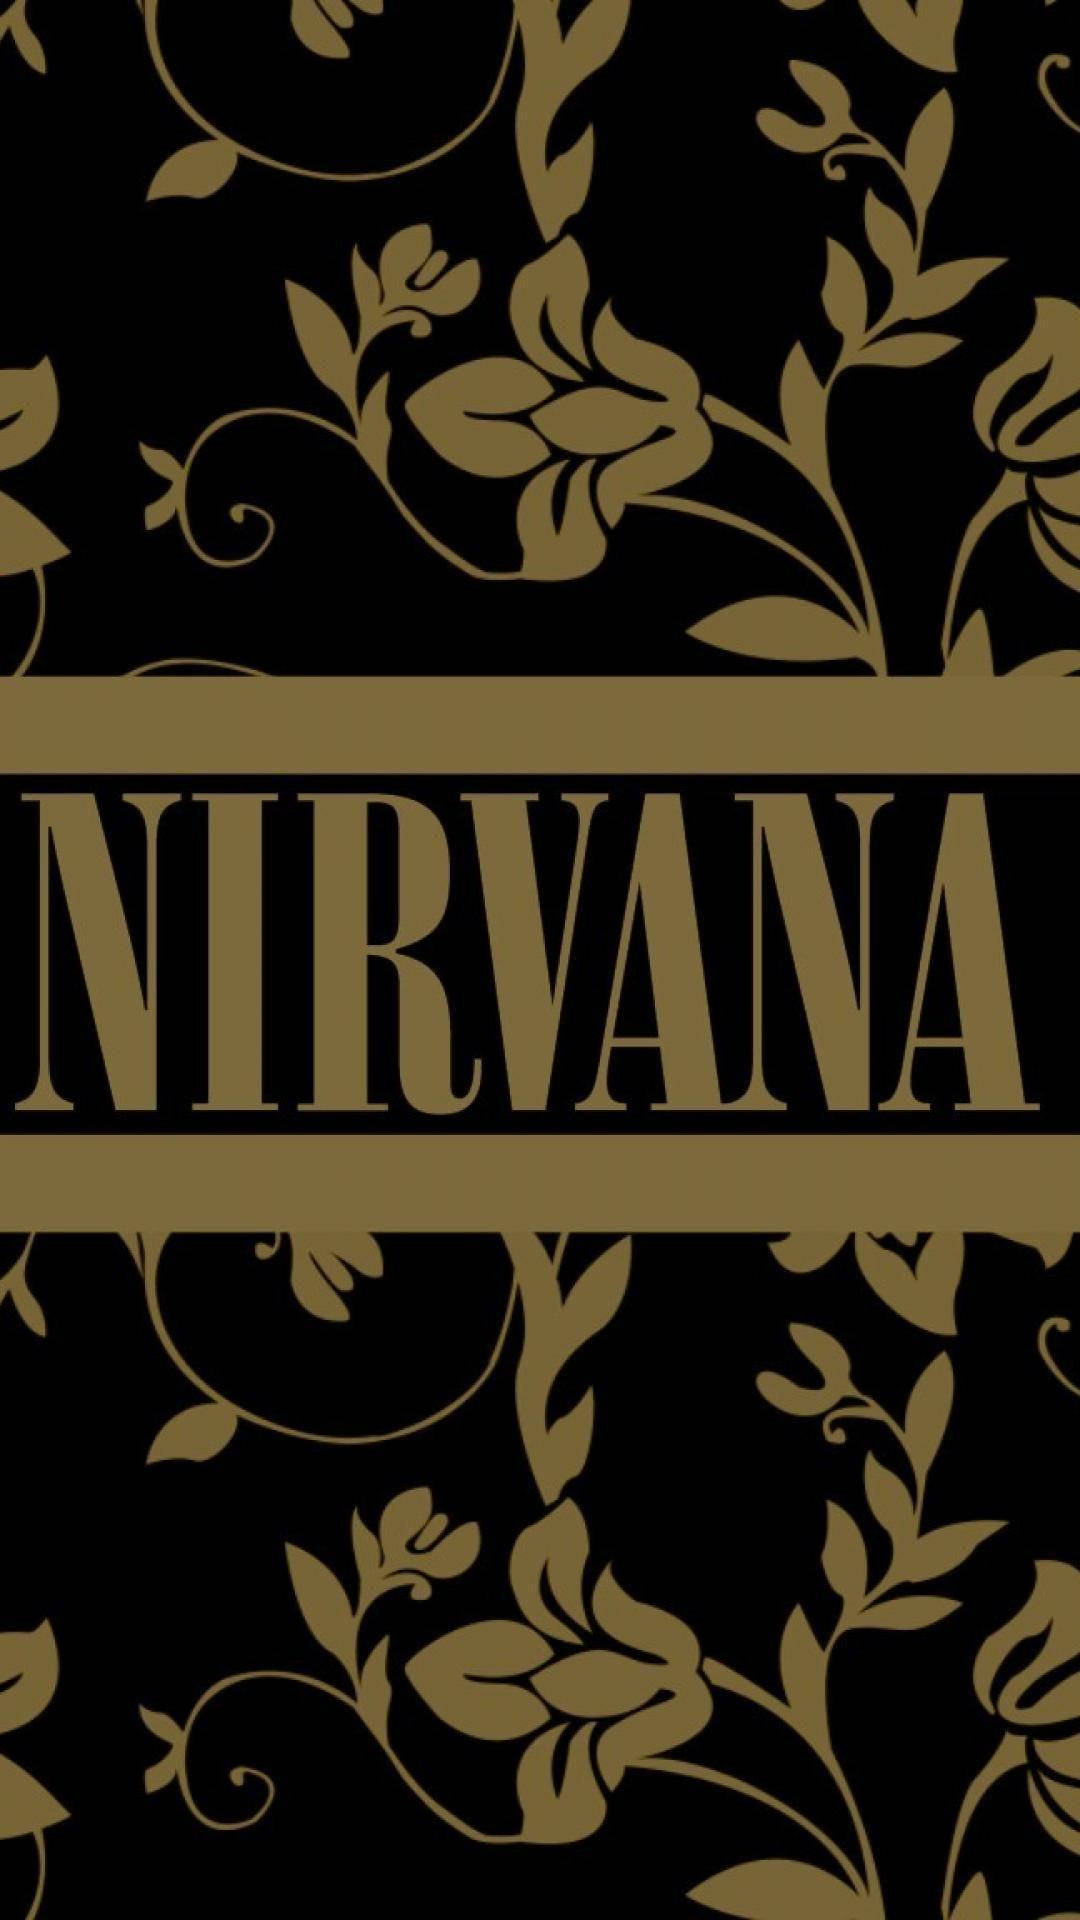 Nirvana With Golden Flower Wallpaper